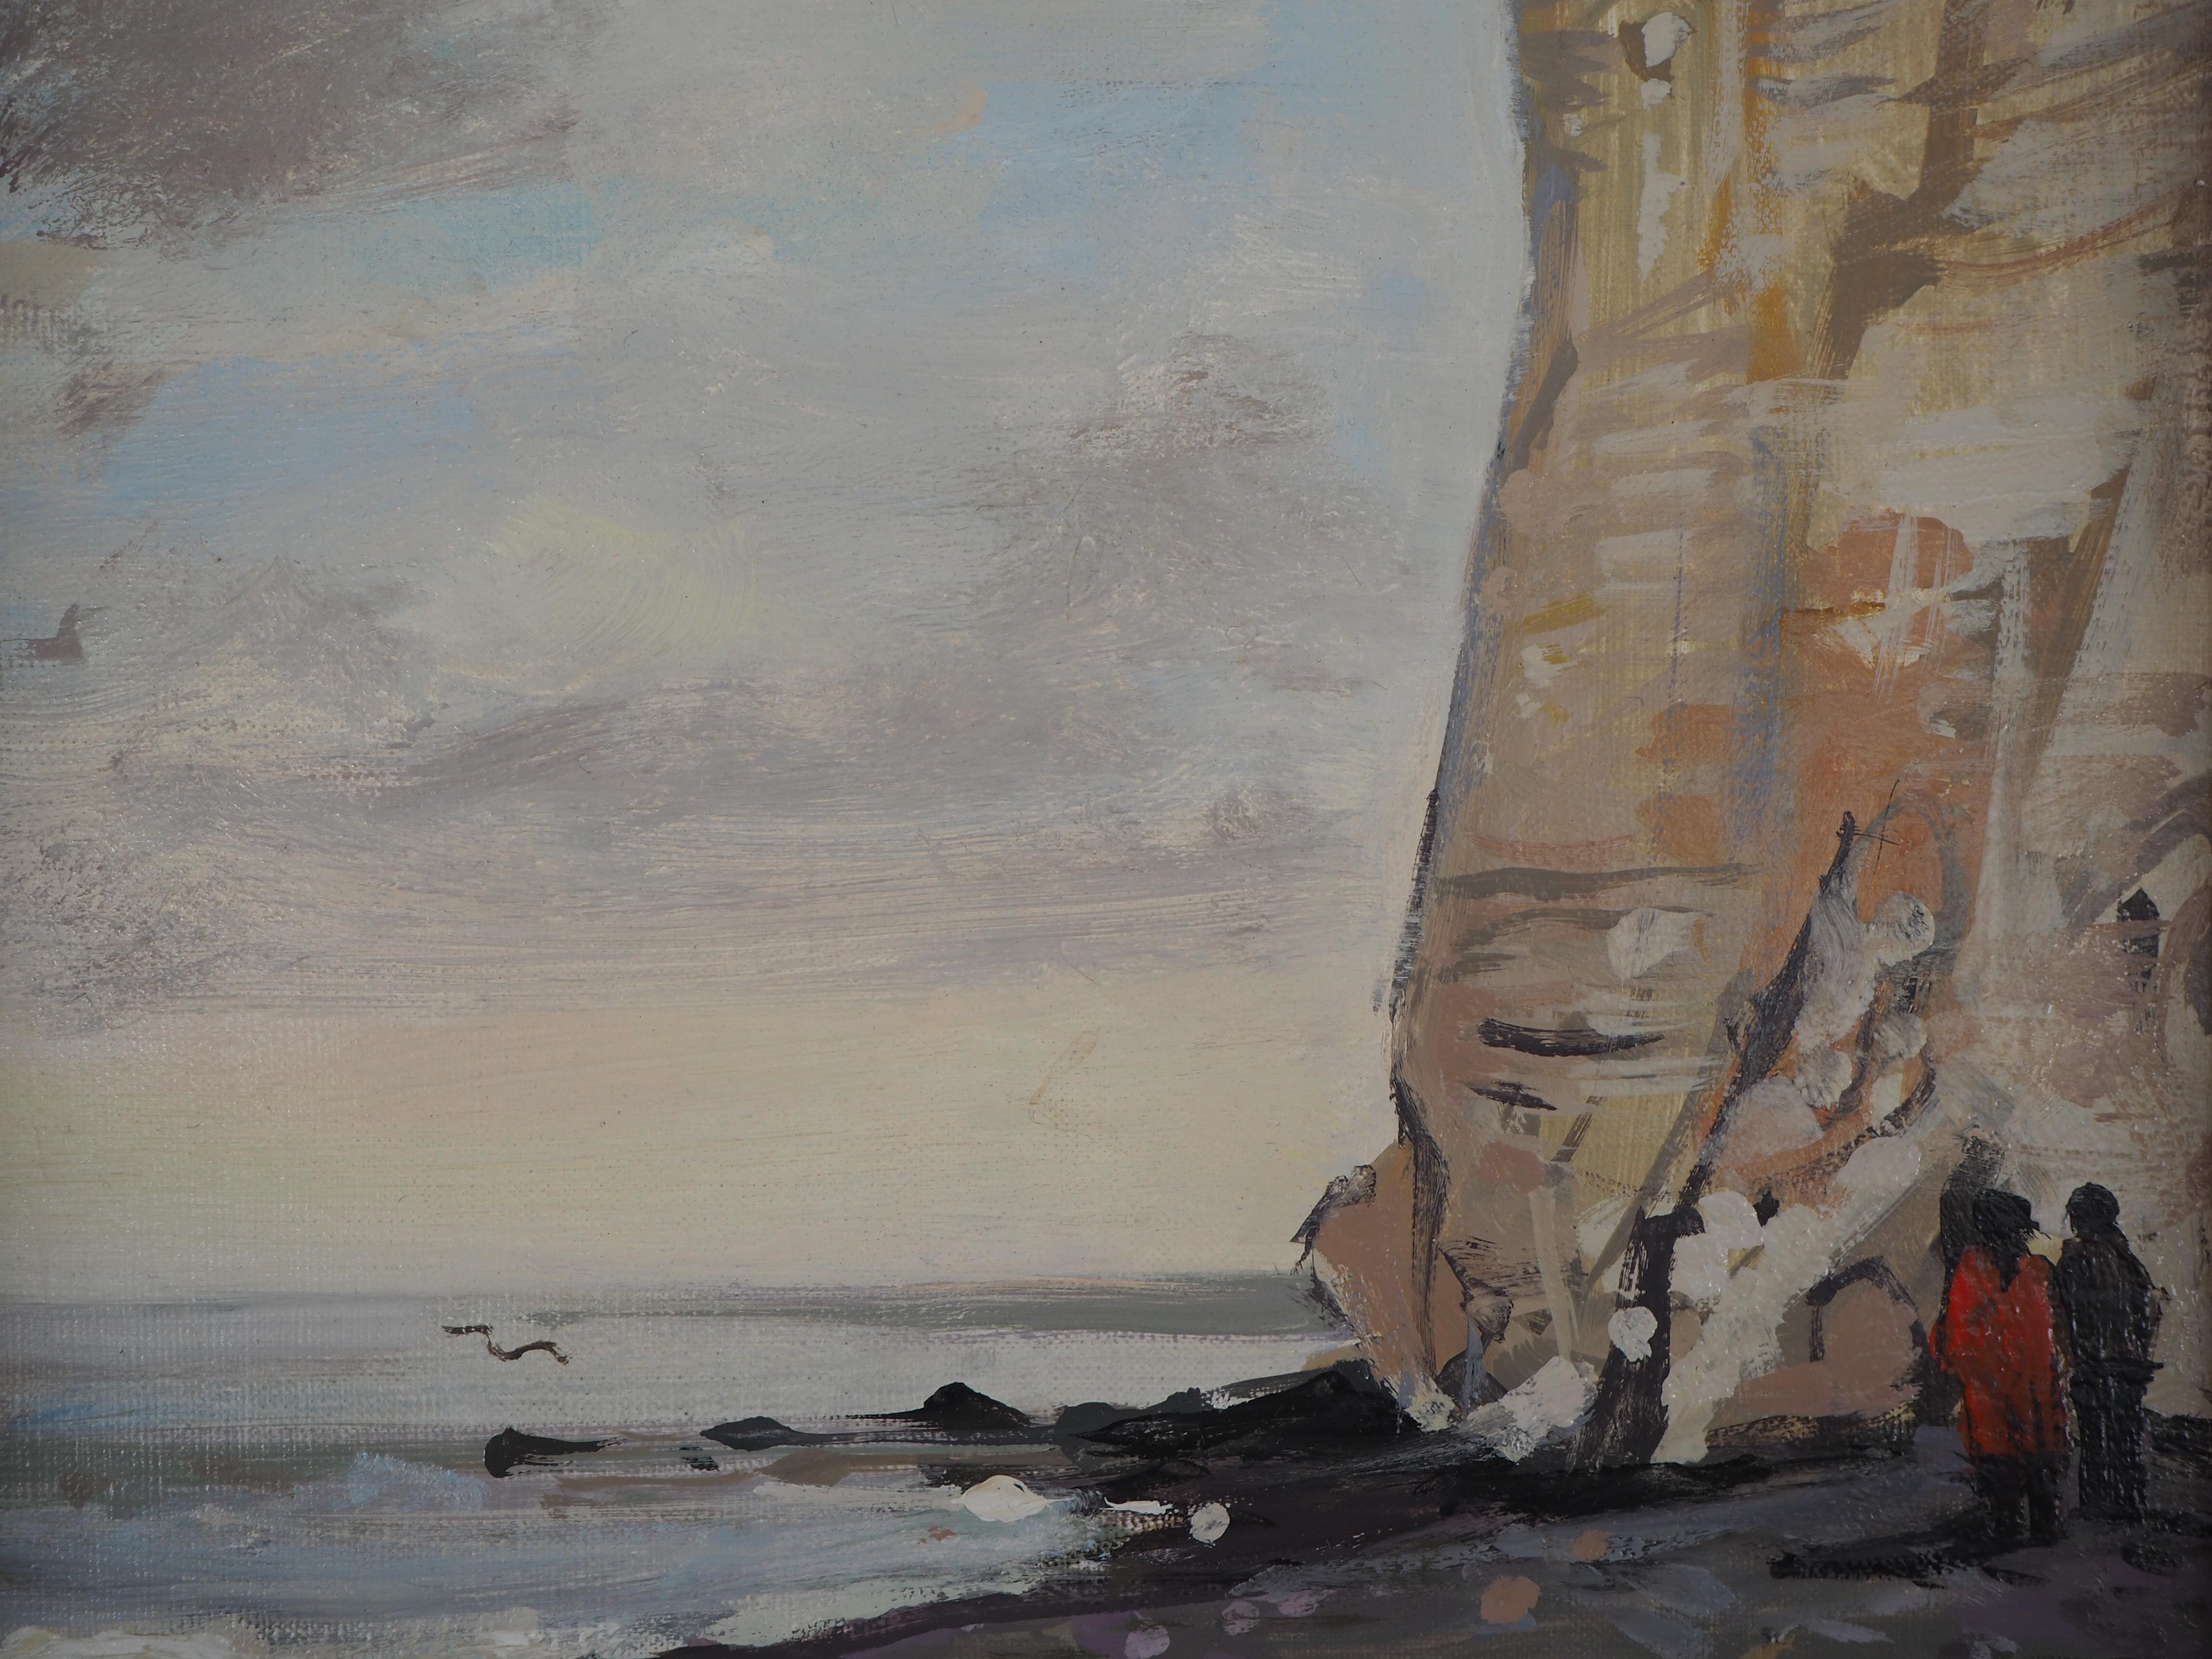 Jean-Jacques RENÉ
Cliffs at Etretat

Oil paint on canvas
Hansigned
33 x 24 cm (c. 13 x 9.5 inch)
Presented in a DELF frame 47 x 37 cm (c. 18.5 x 14.6 inch)

Excellent condition